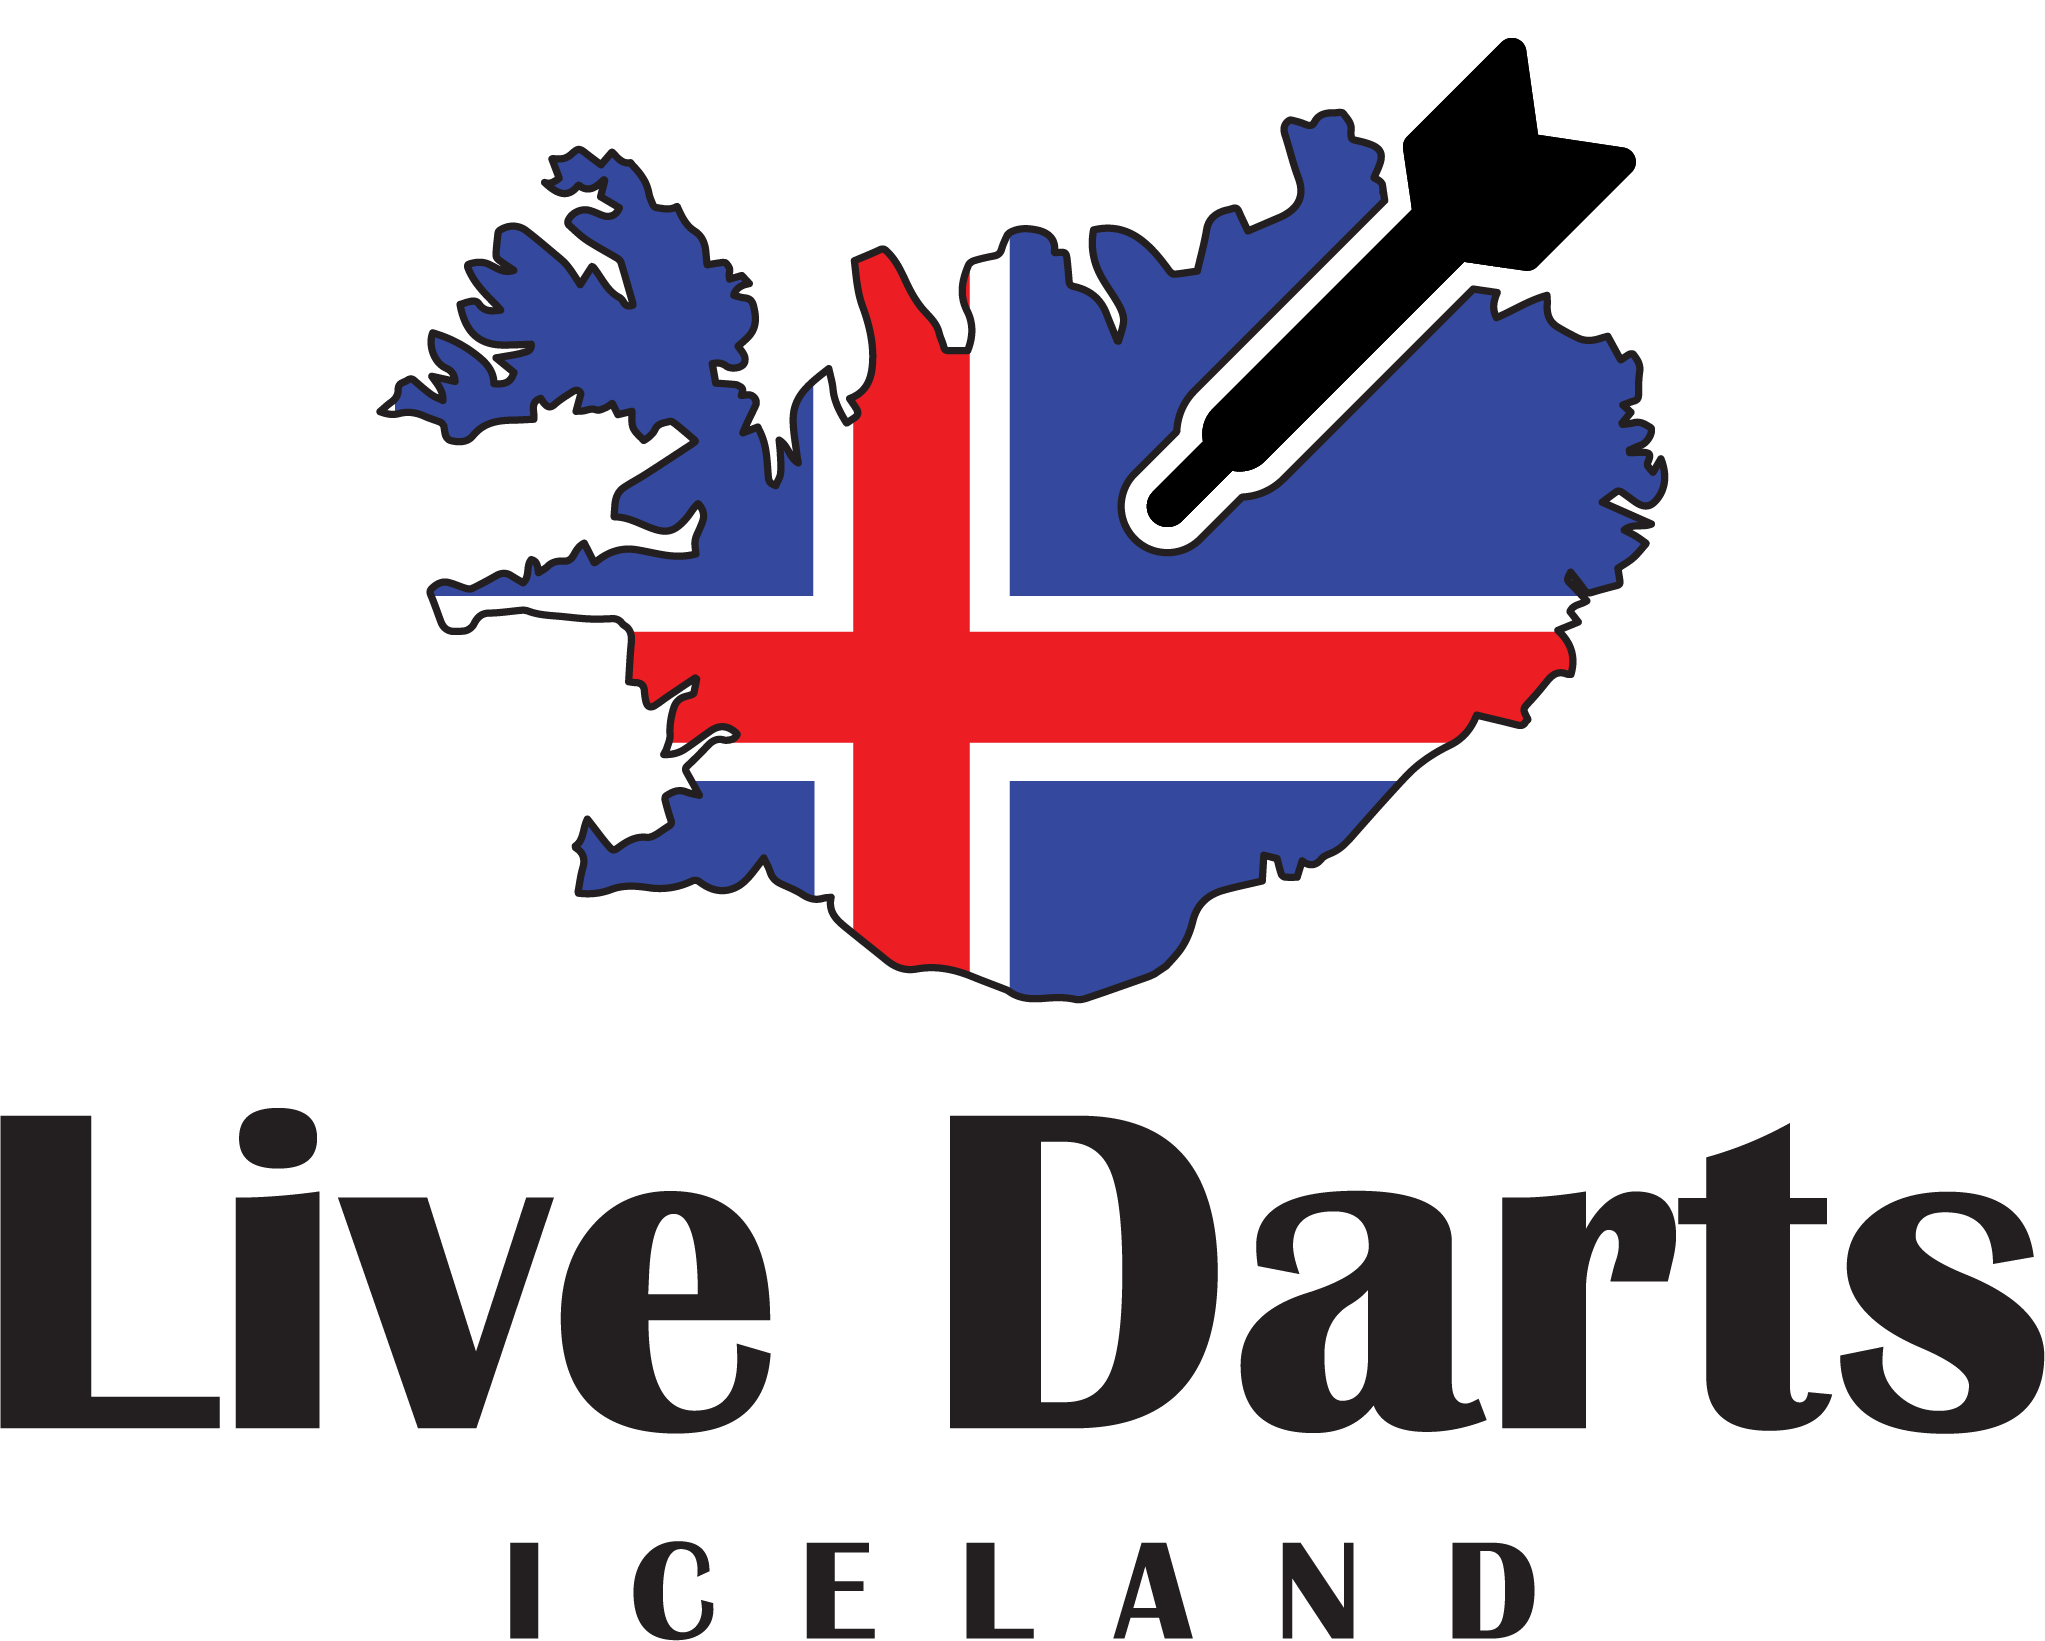 Live Darts Iceland